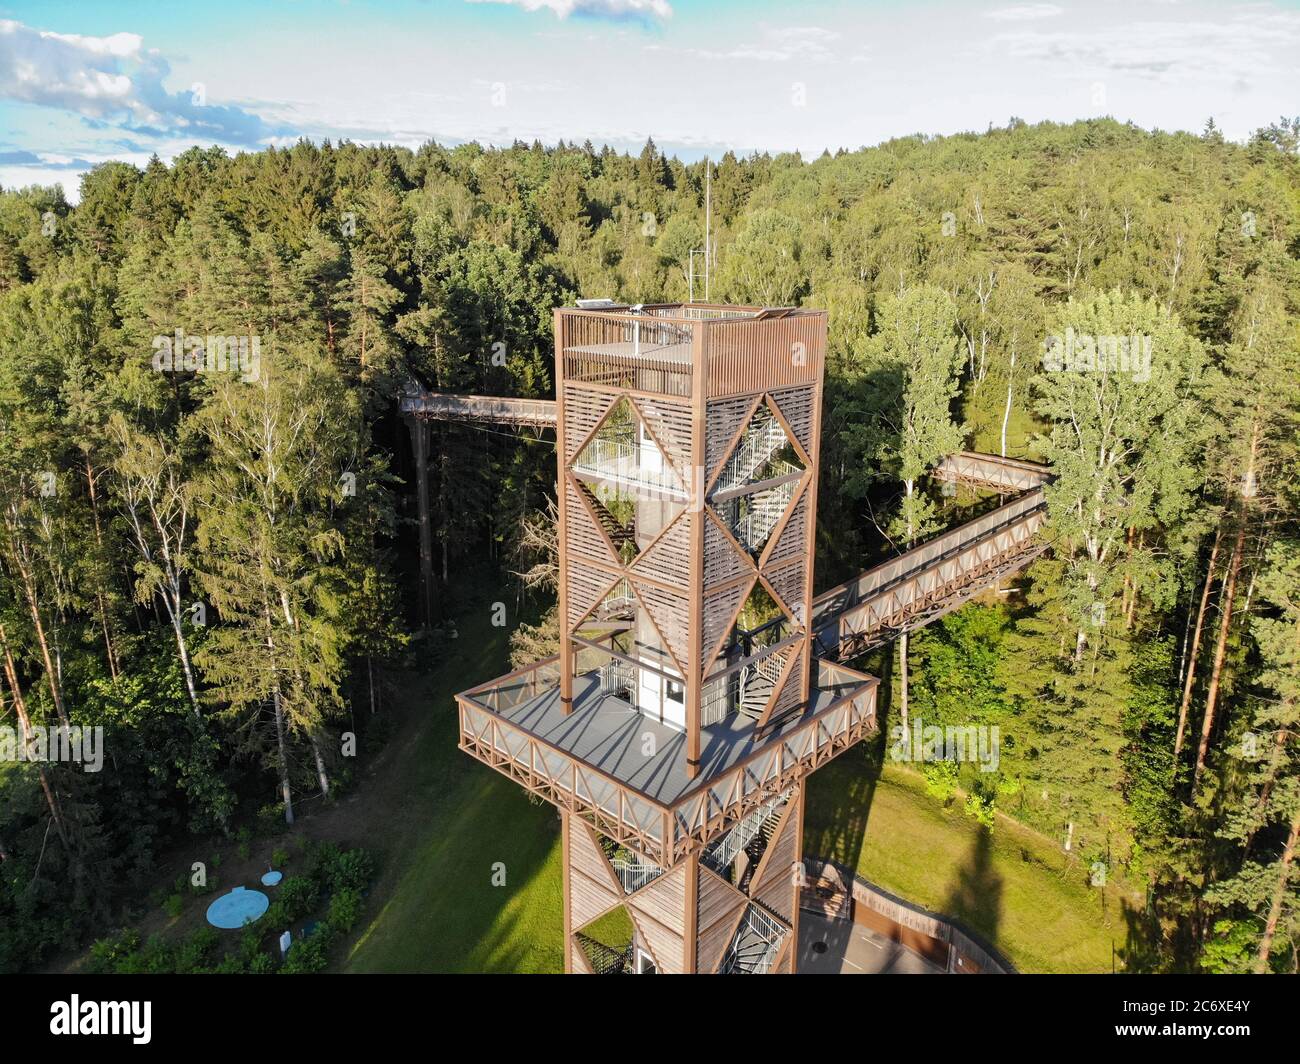 The treetop walking path watchtower in laju takas, Anyksciai, Lithuania  Stock Photo - Alamy